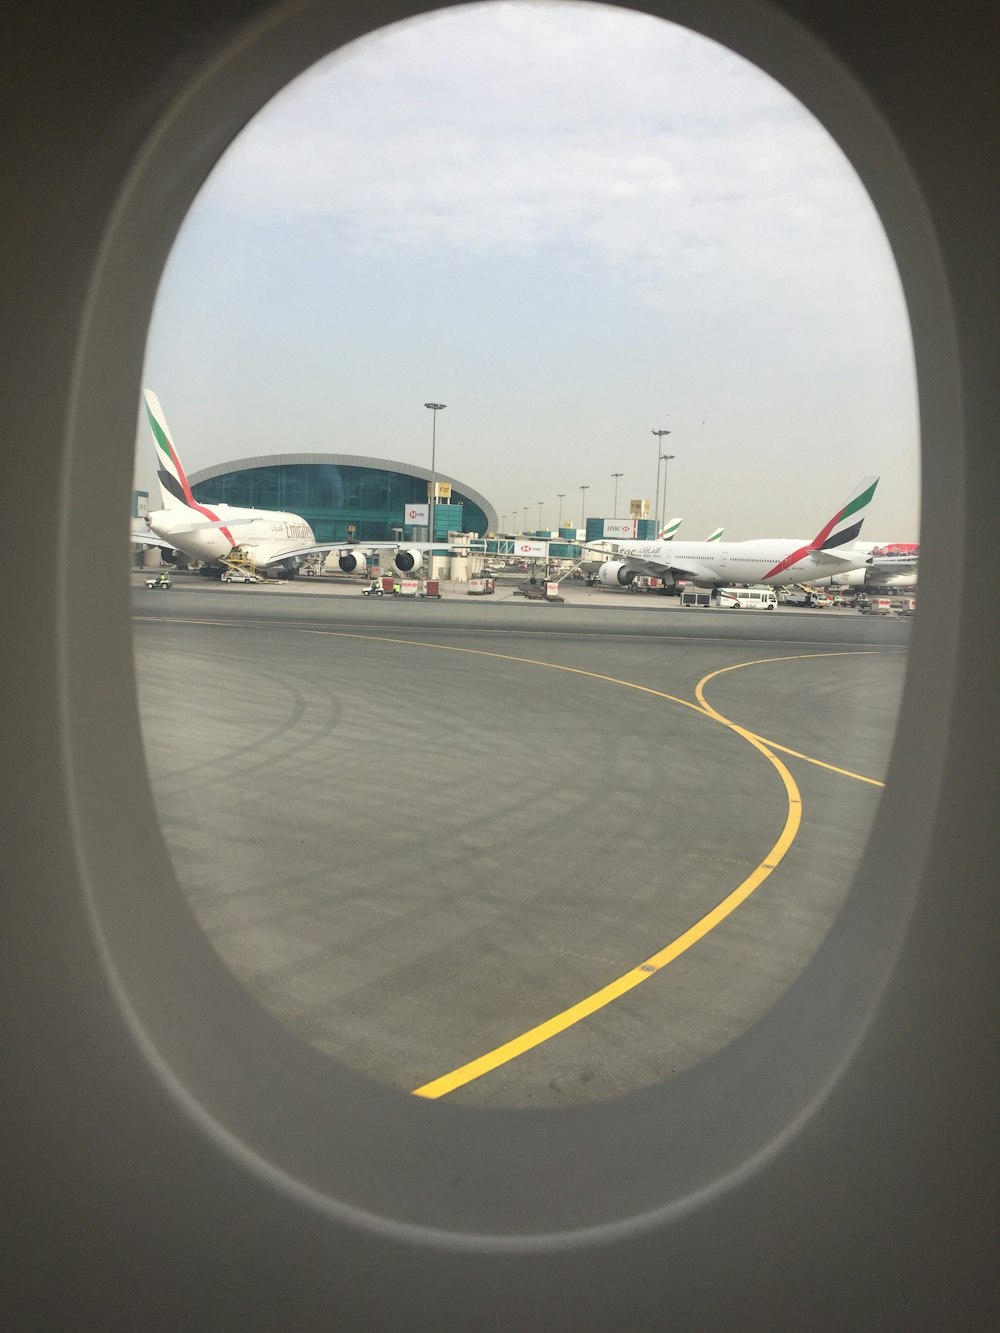 550+ Dubai Airport Pictures  Download Free Images on Unsplash